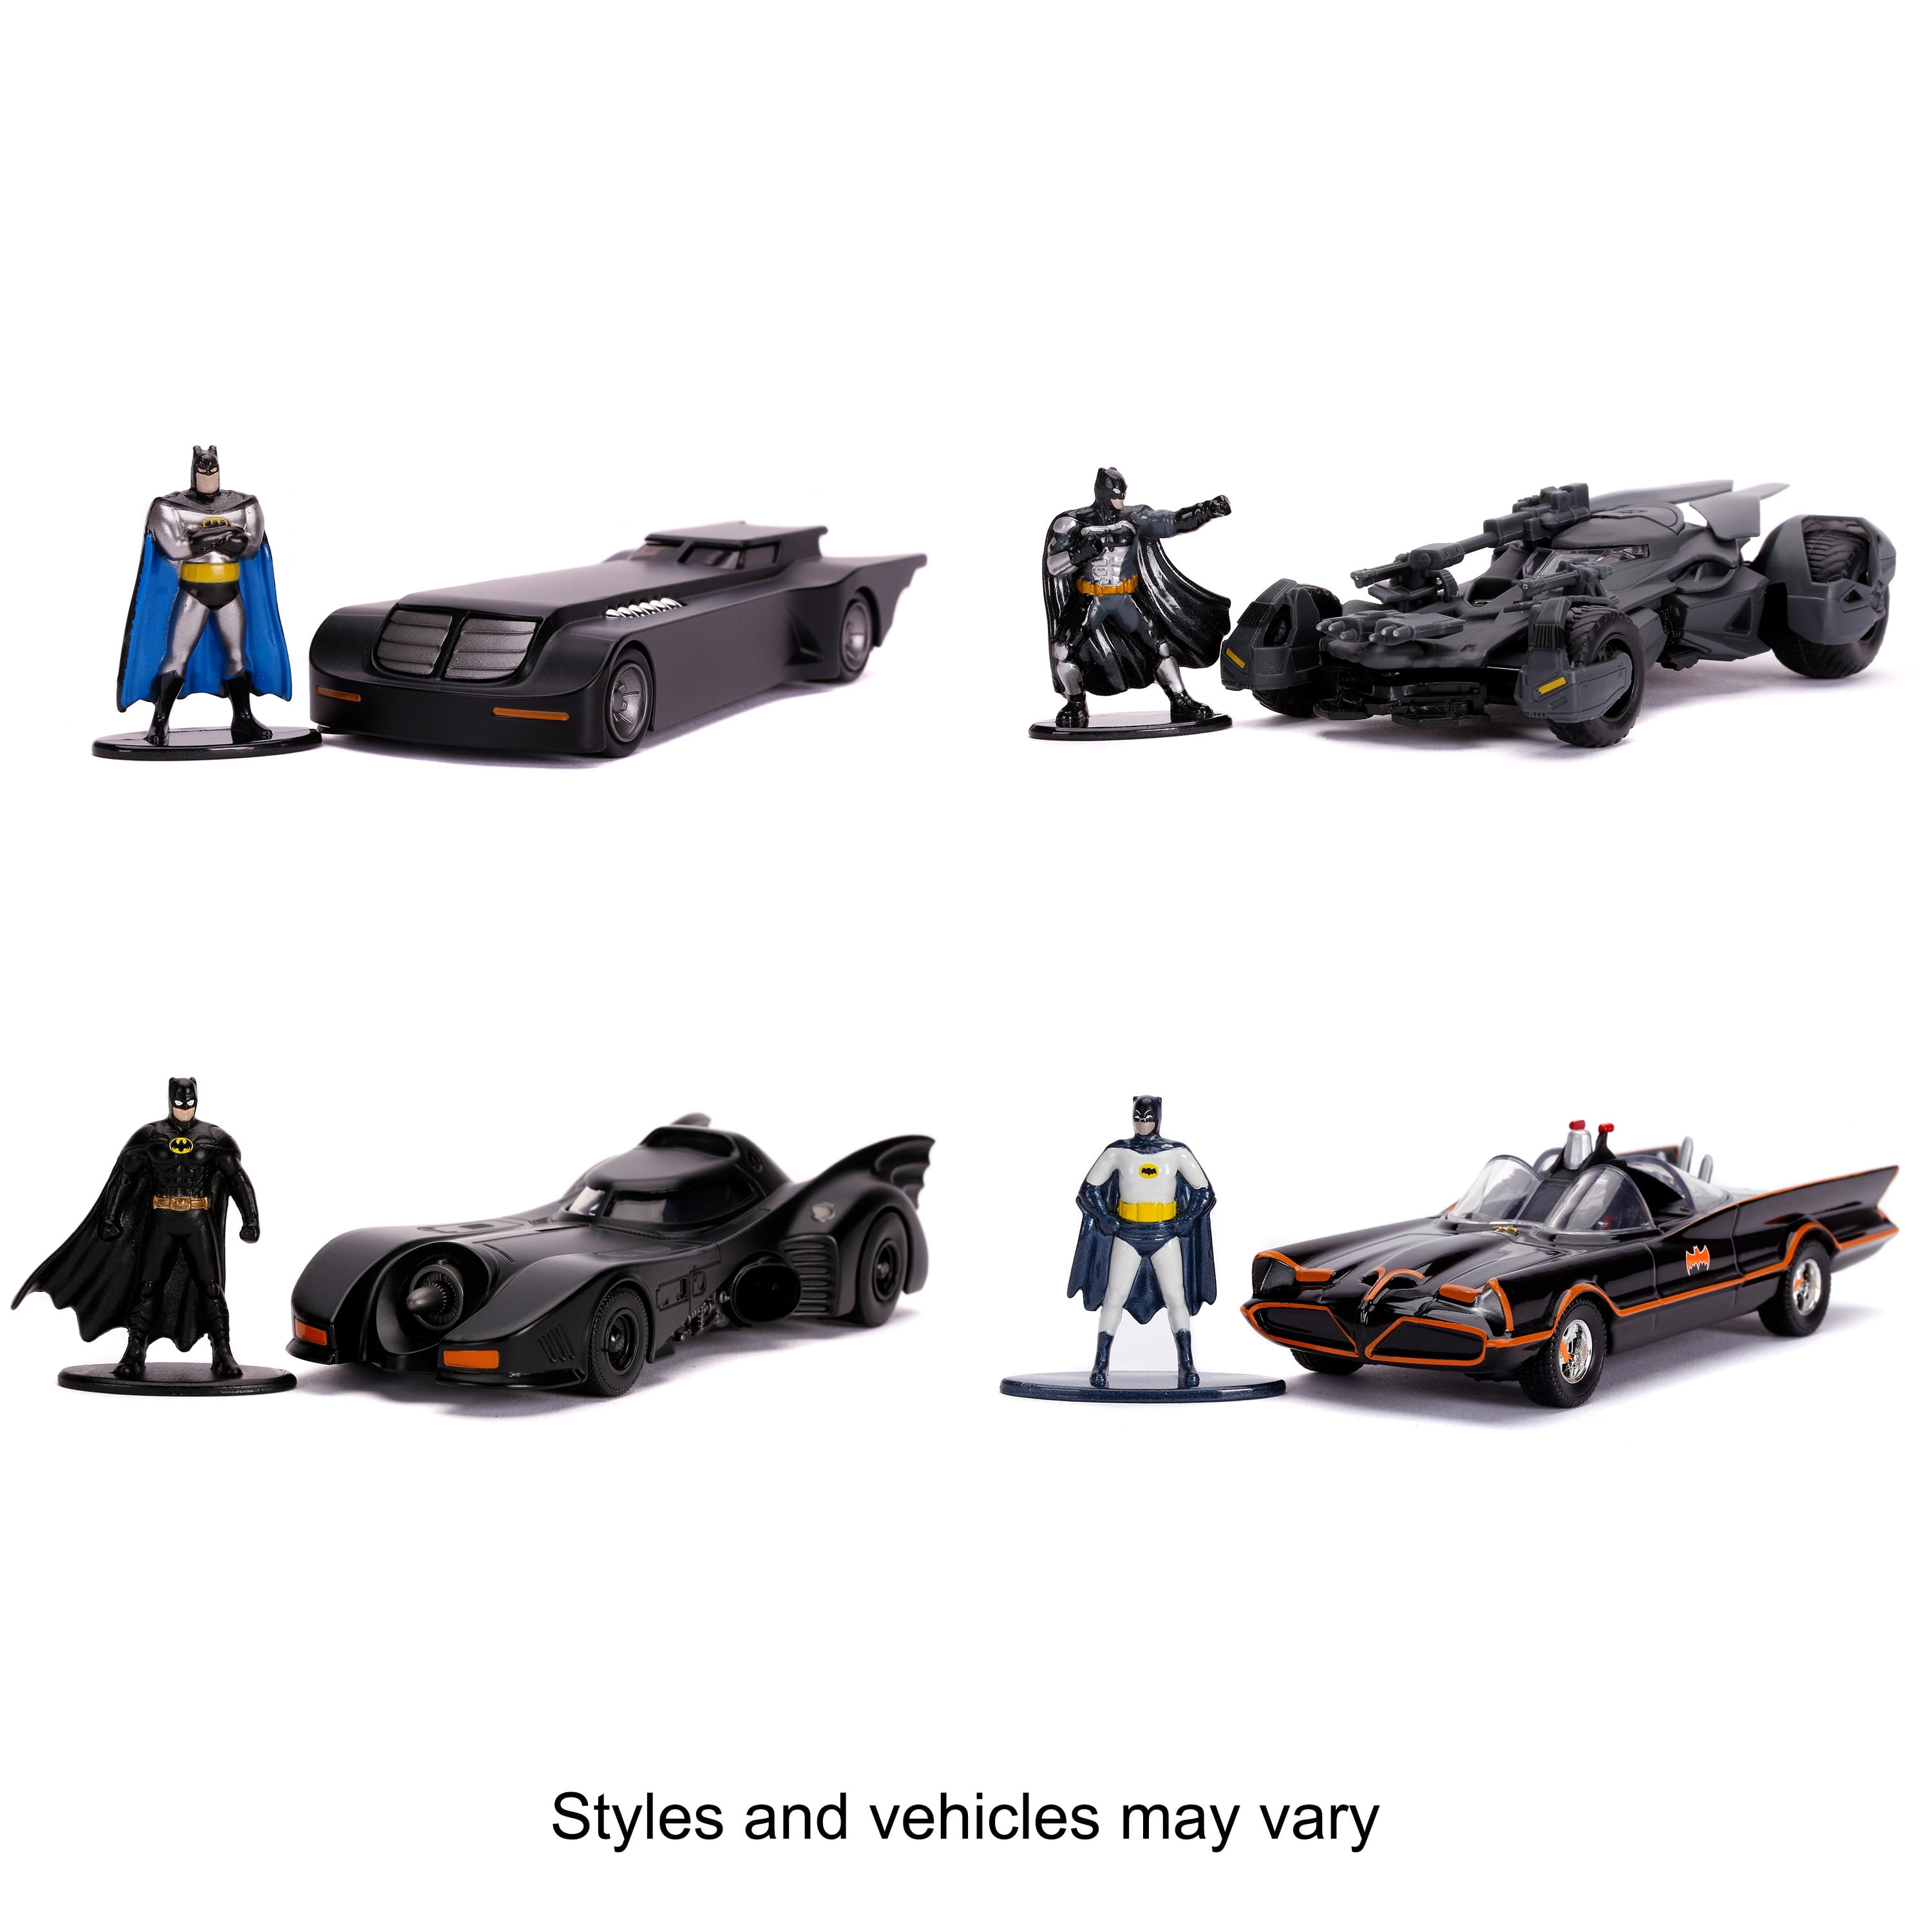 1/32 SLOT CAR DIECAST PLASTIC MODEL Batman Batmobile CLEAR CUT & PEEL STICKERS 